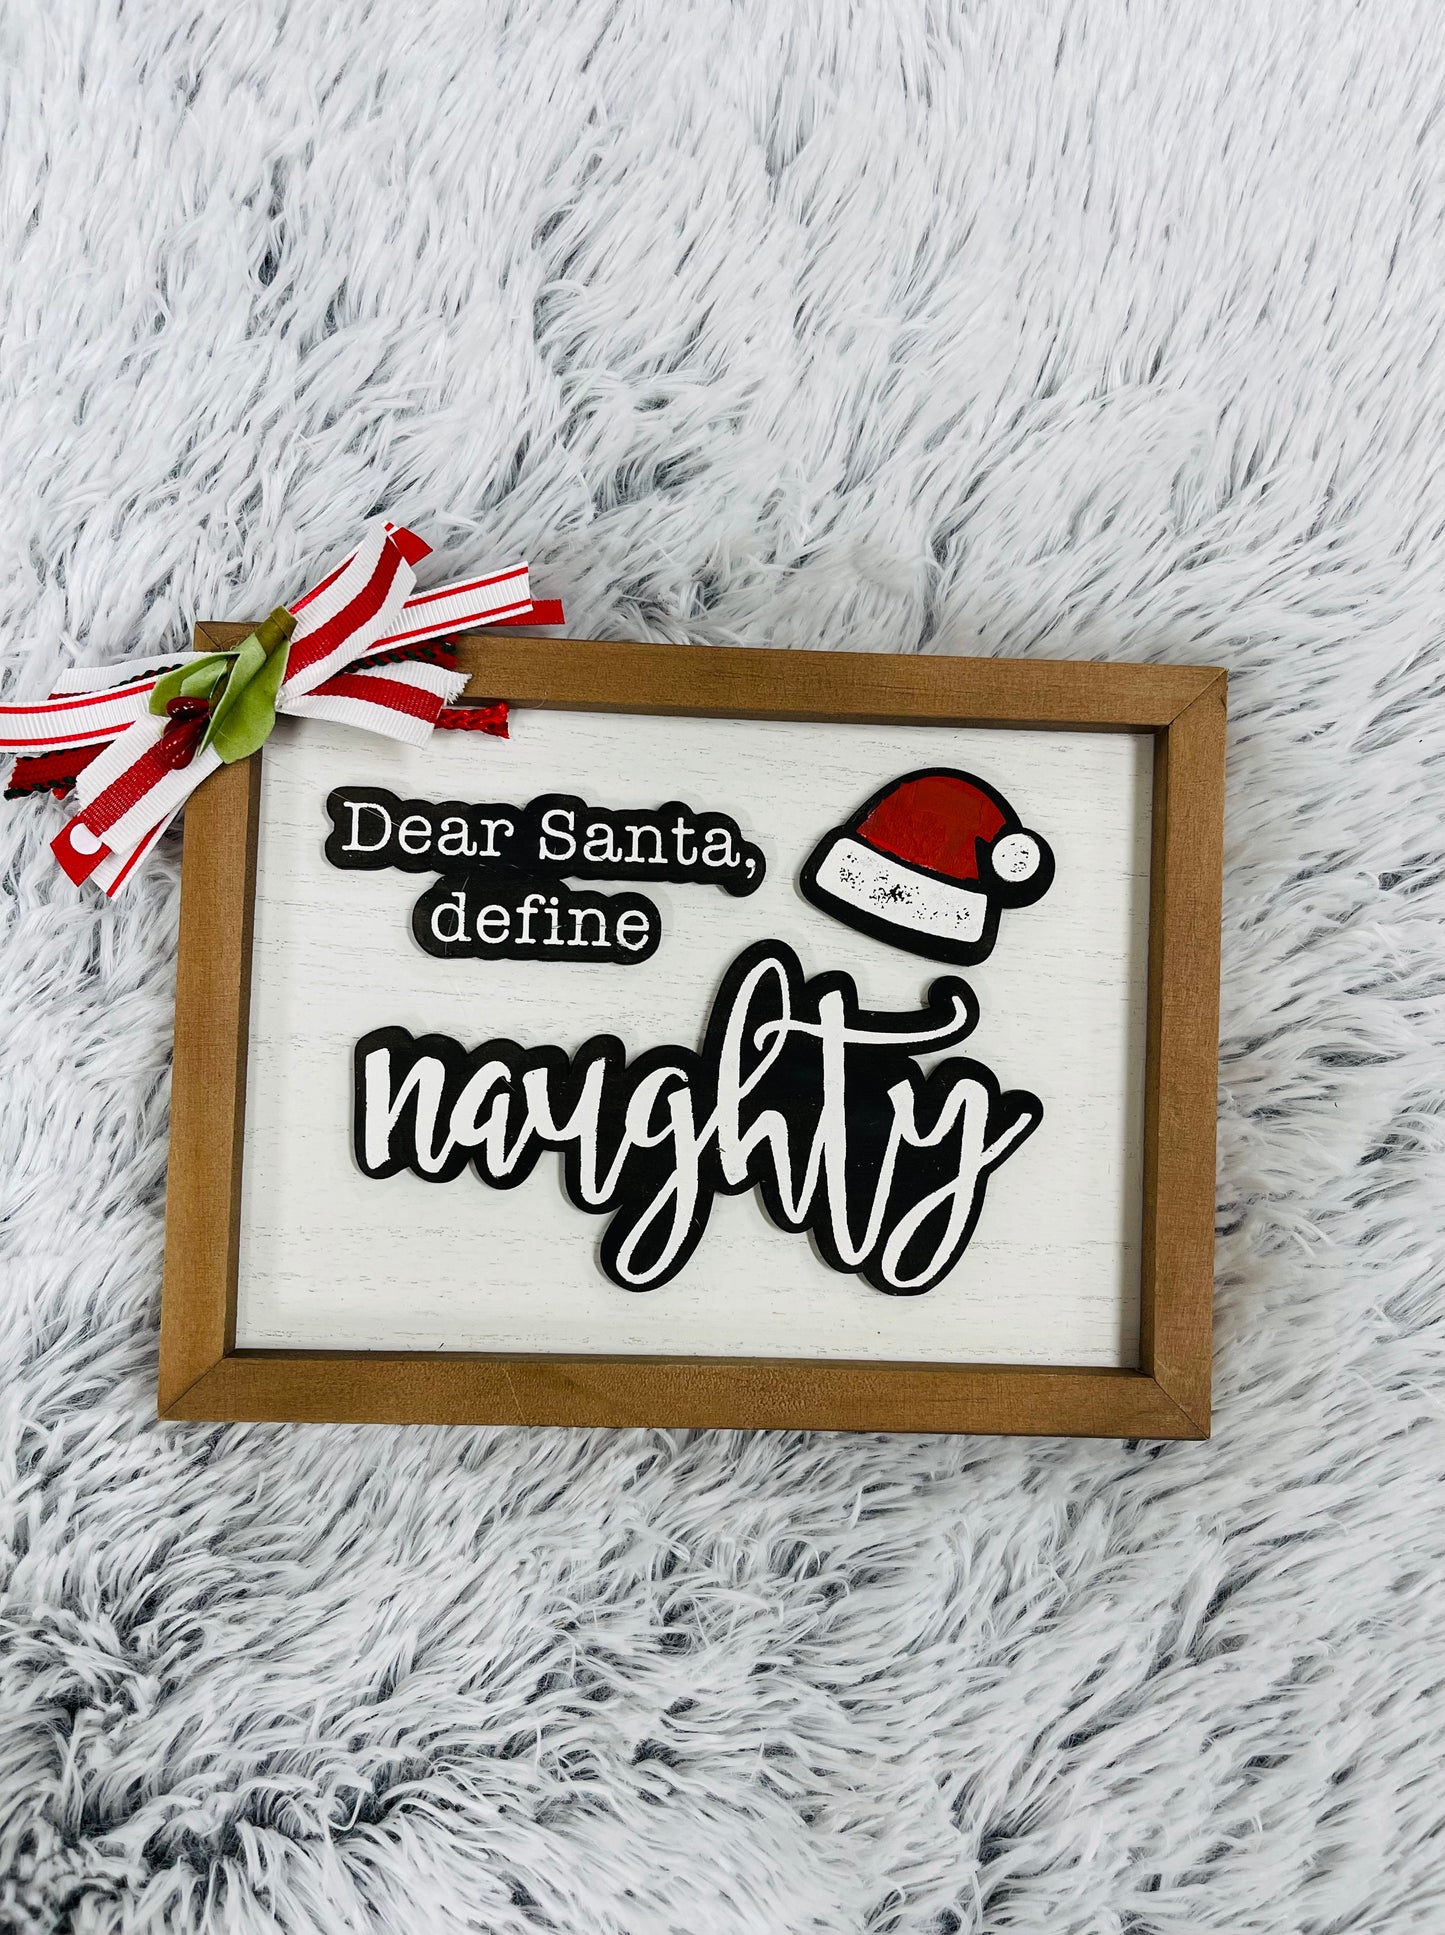 Dear Santa Define Naughty - unpainted wood cutout